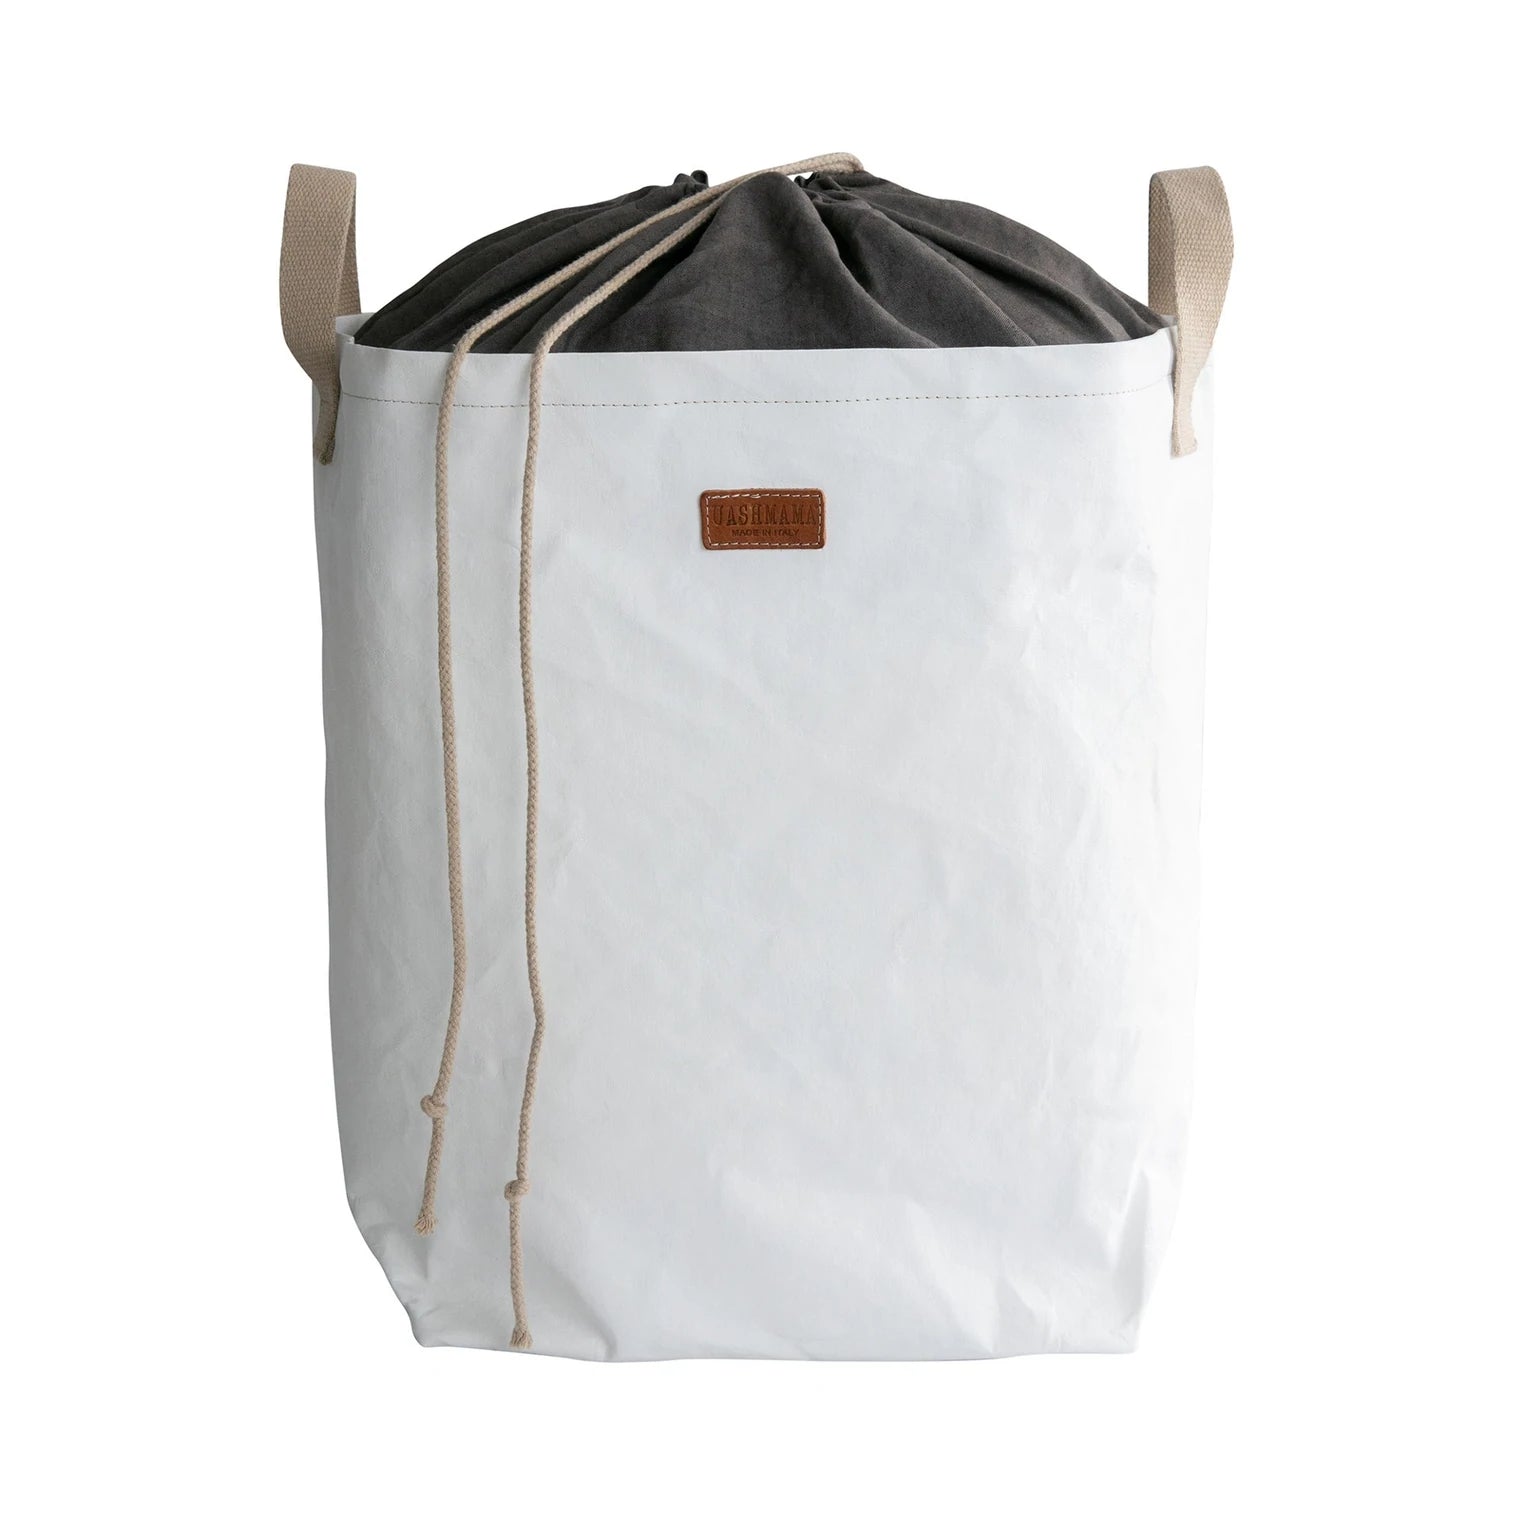 Positano Bag - Solid Top/White